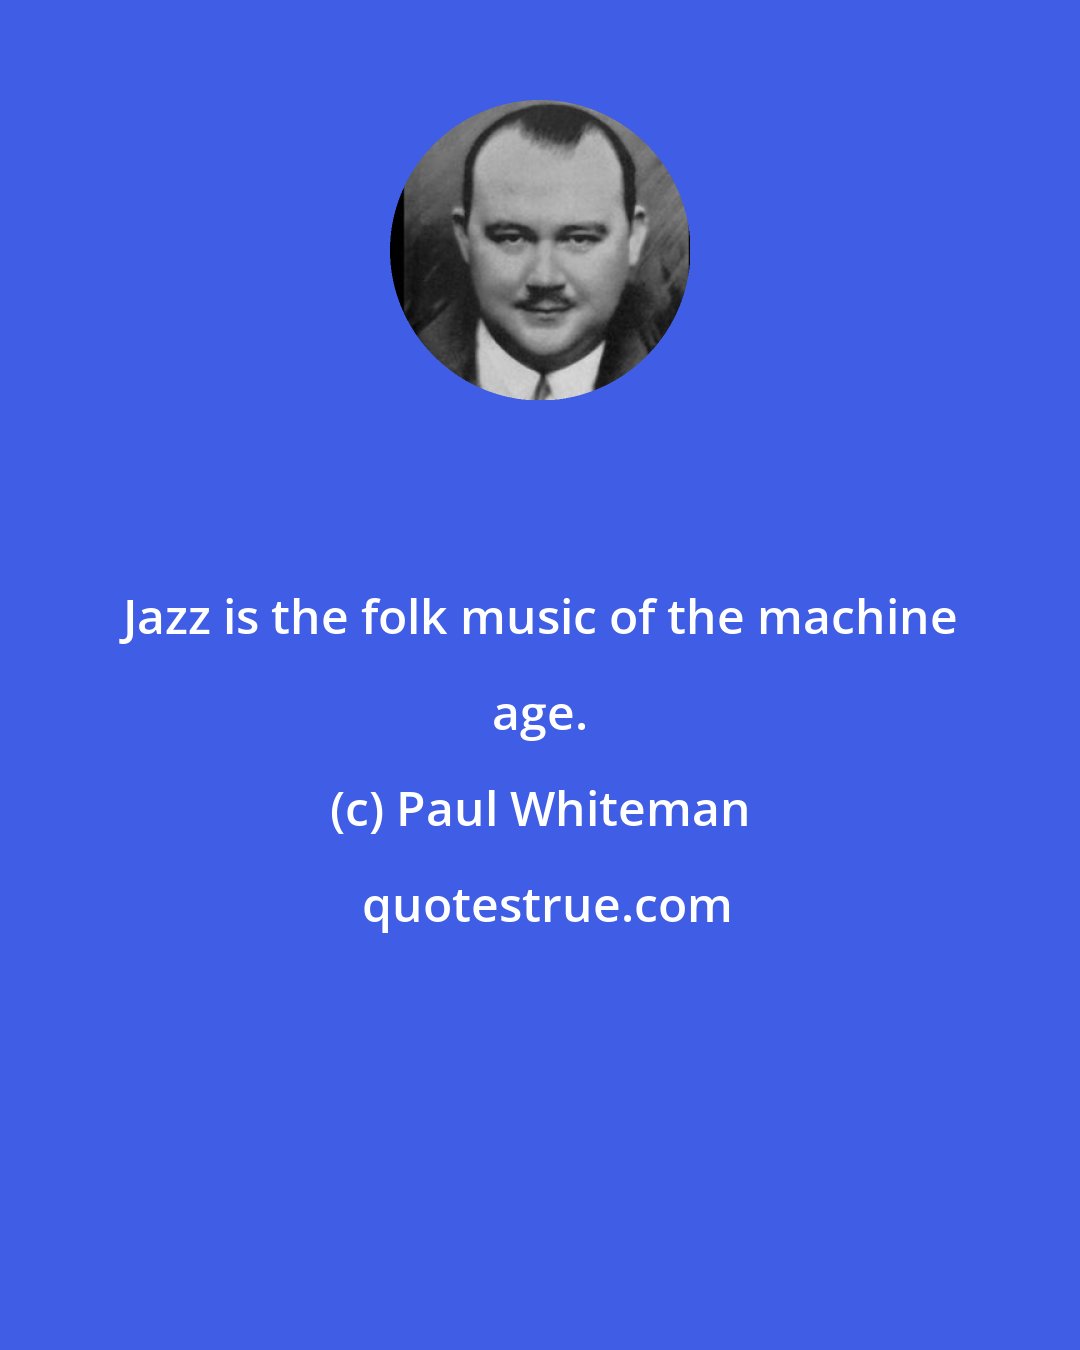 Paul Whiteman: Jazz is the folk music of the machine age.